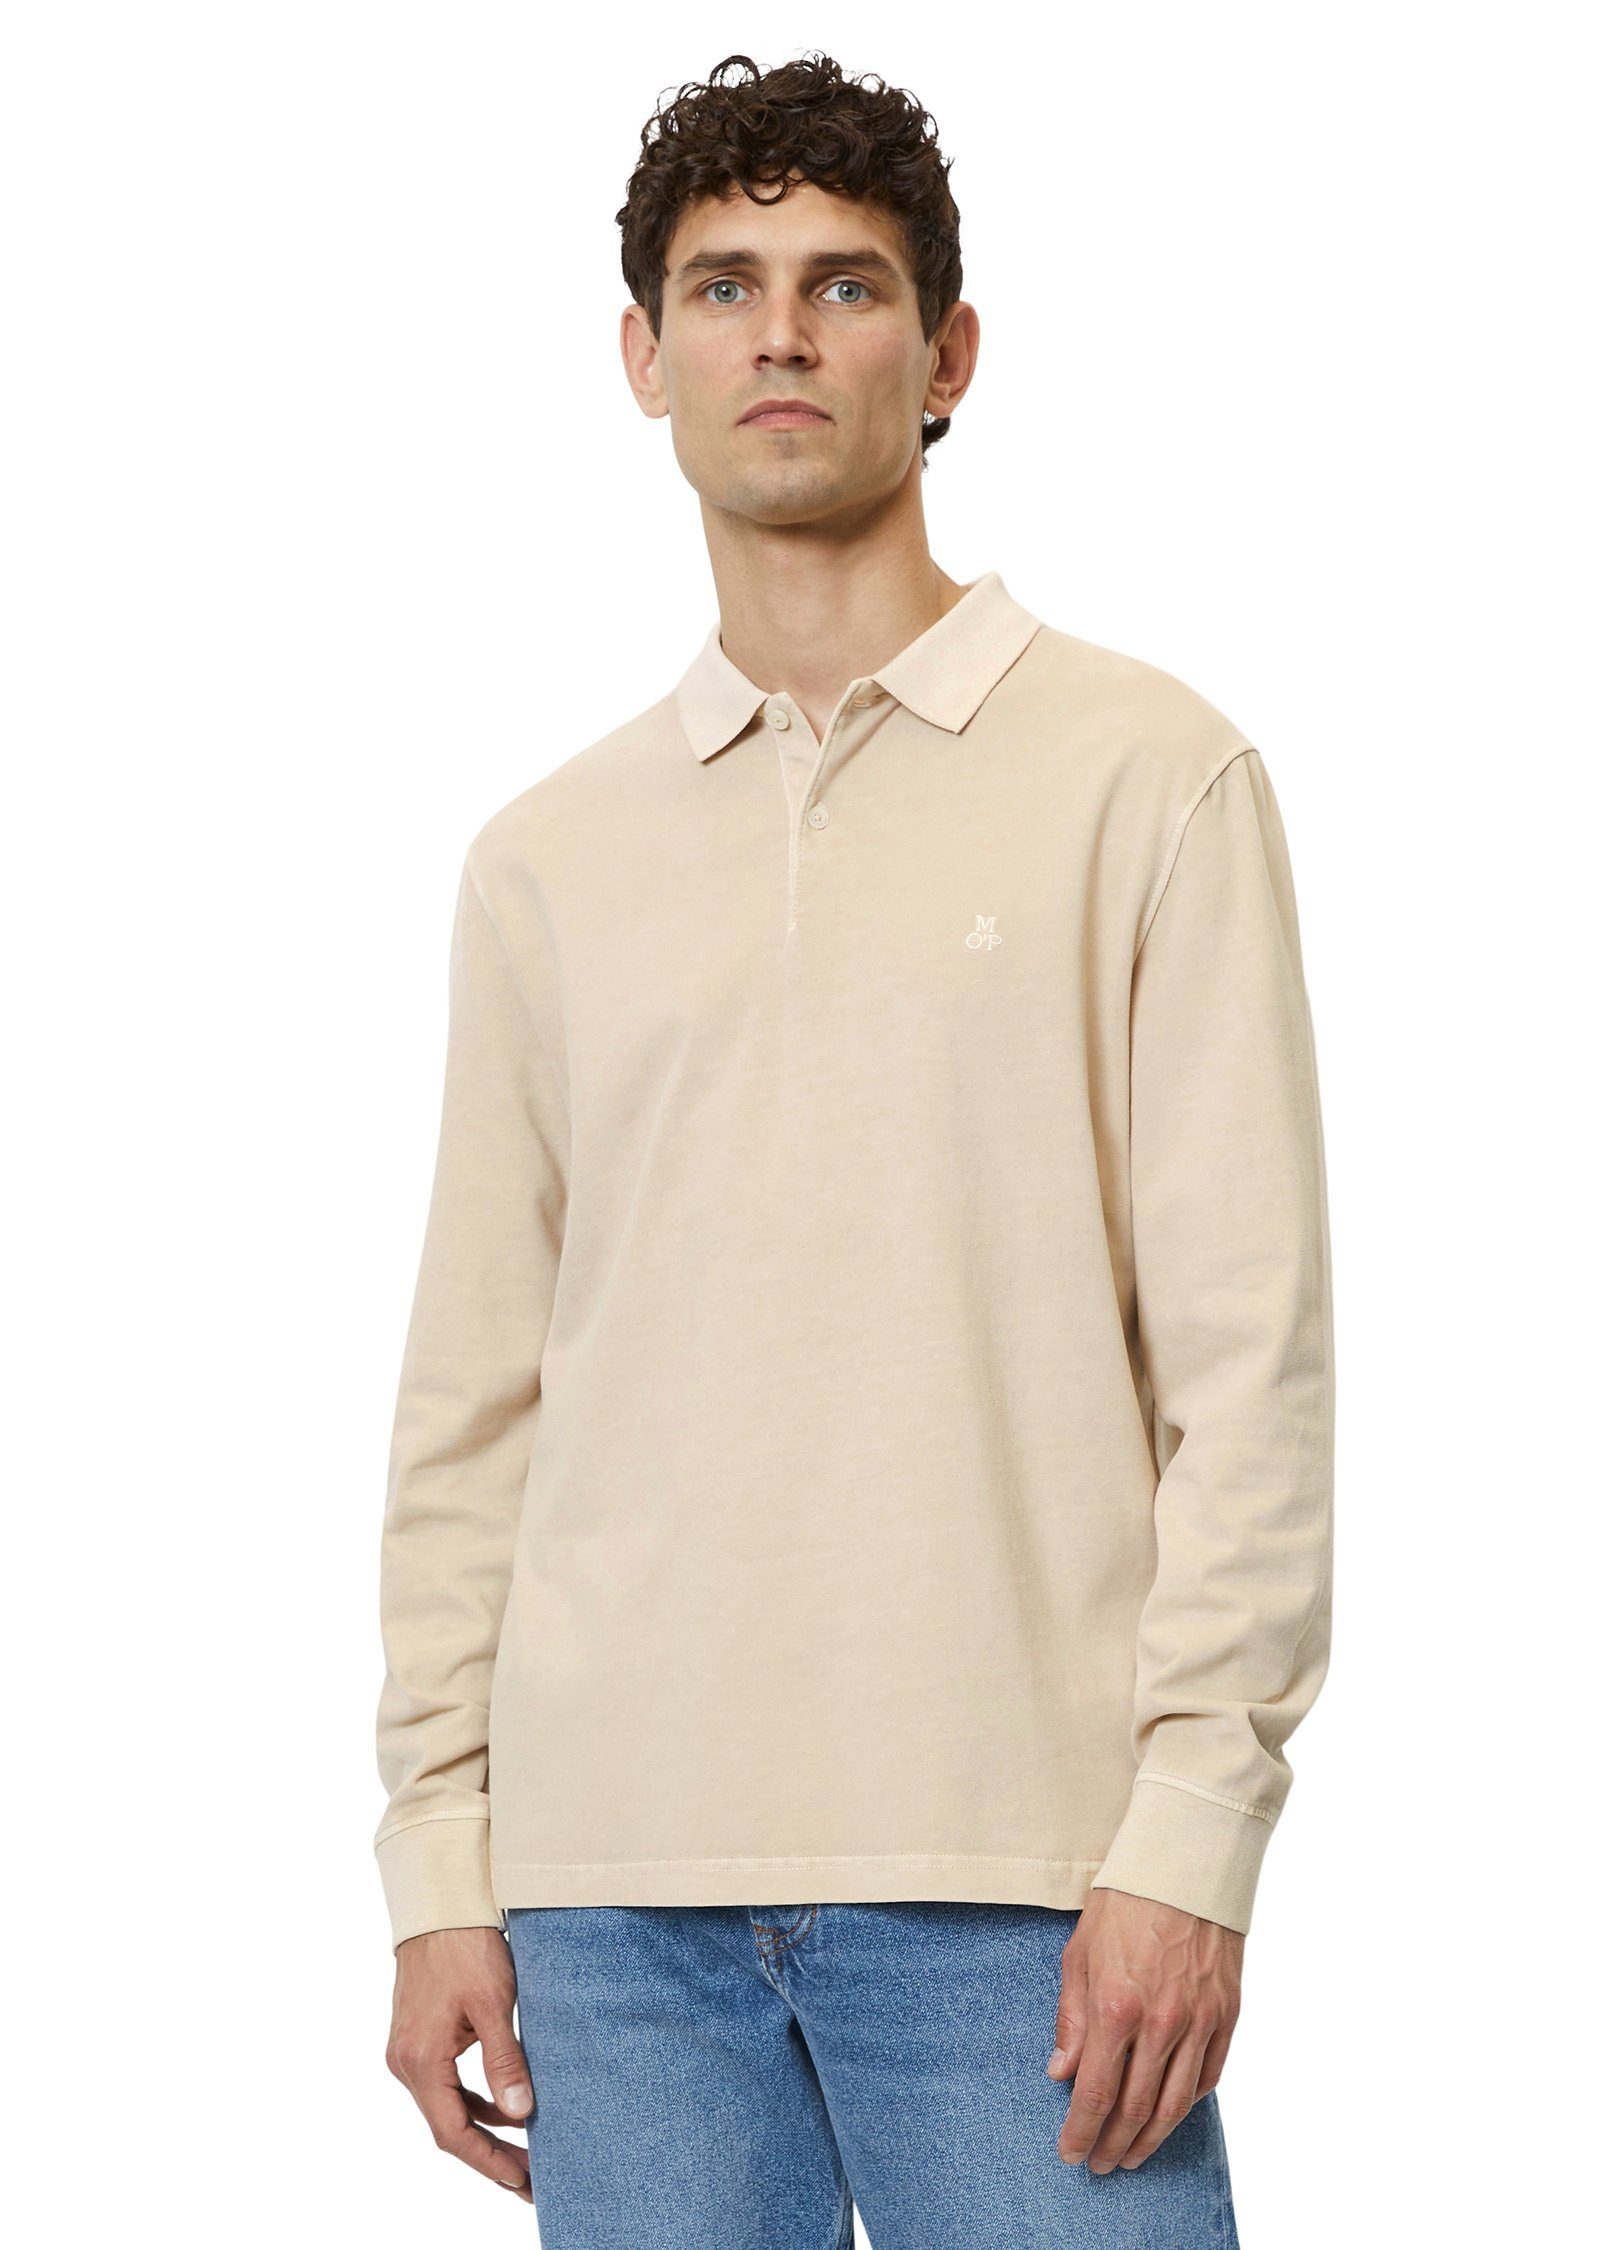 Marc O'Polo Langarm-Poloshirt in schwerer Soft-Touch-Jersey-Qualität beige